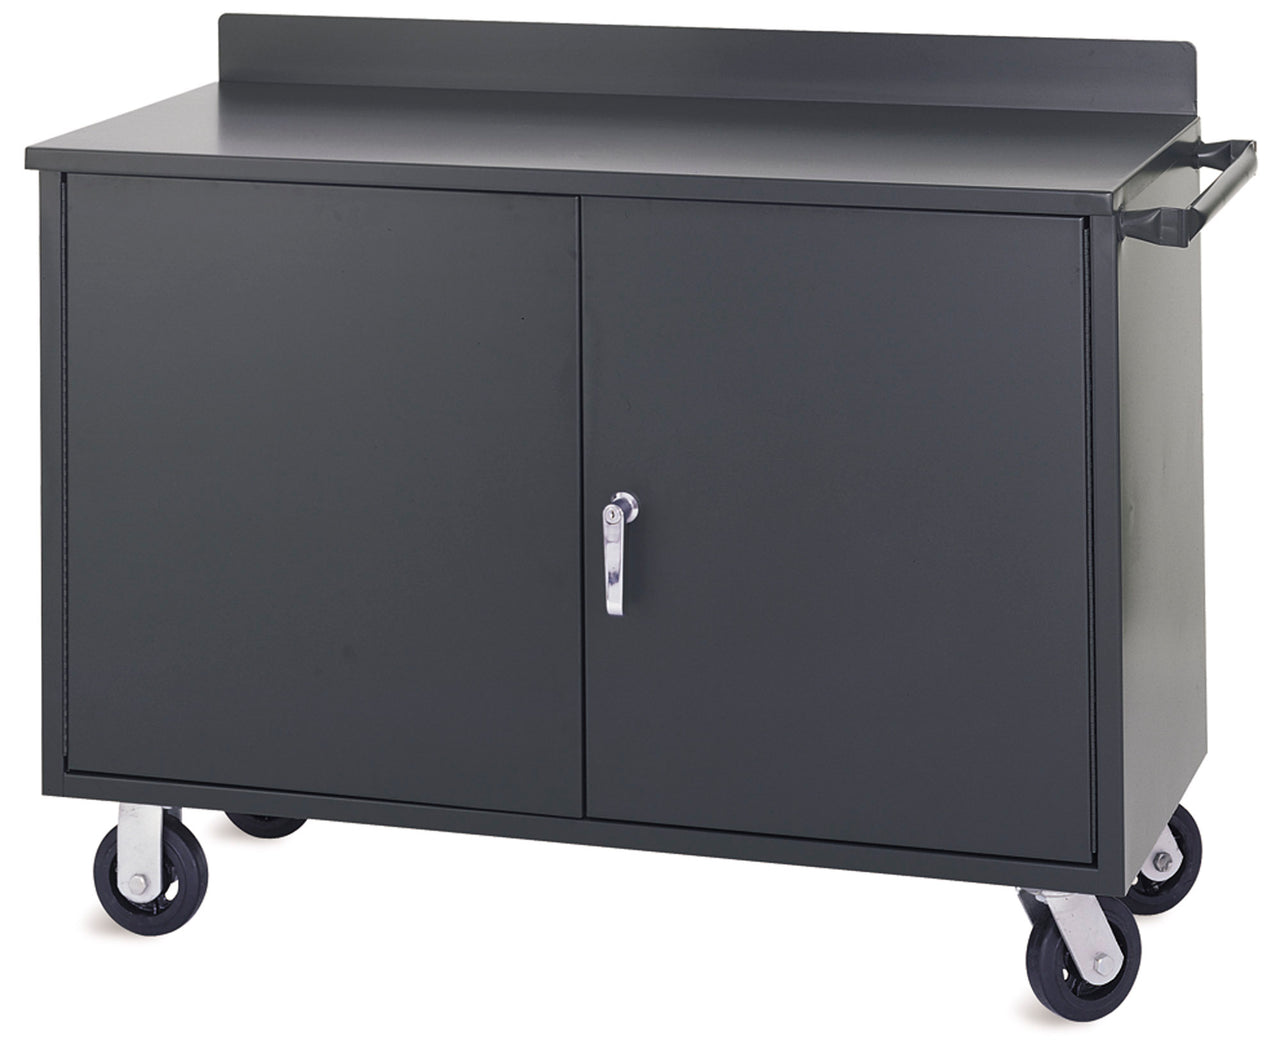 Vari-Tuff Mobile Shelf Cabinet, 36" x 21" x 34"